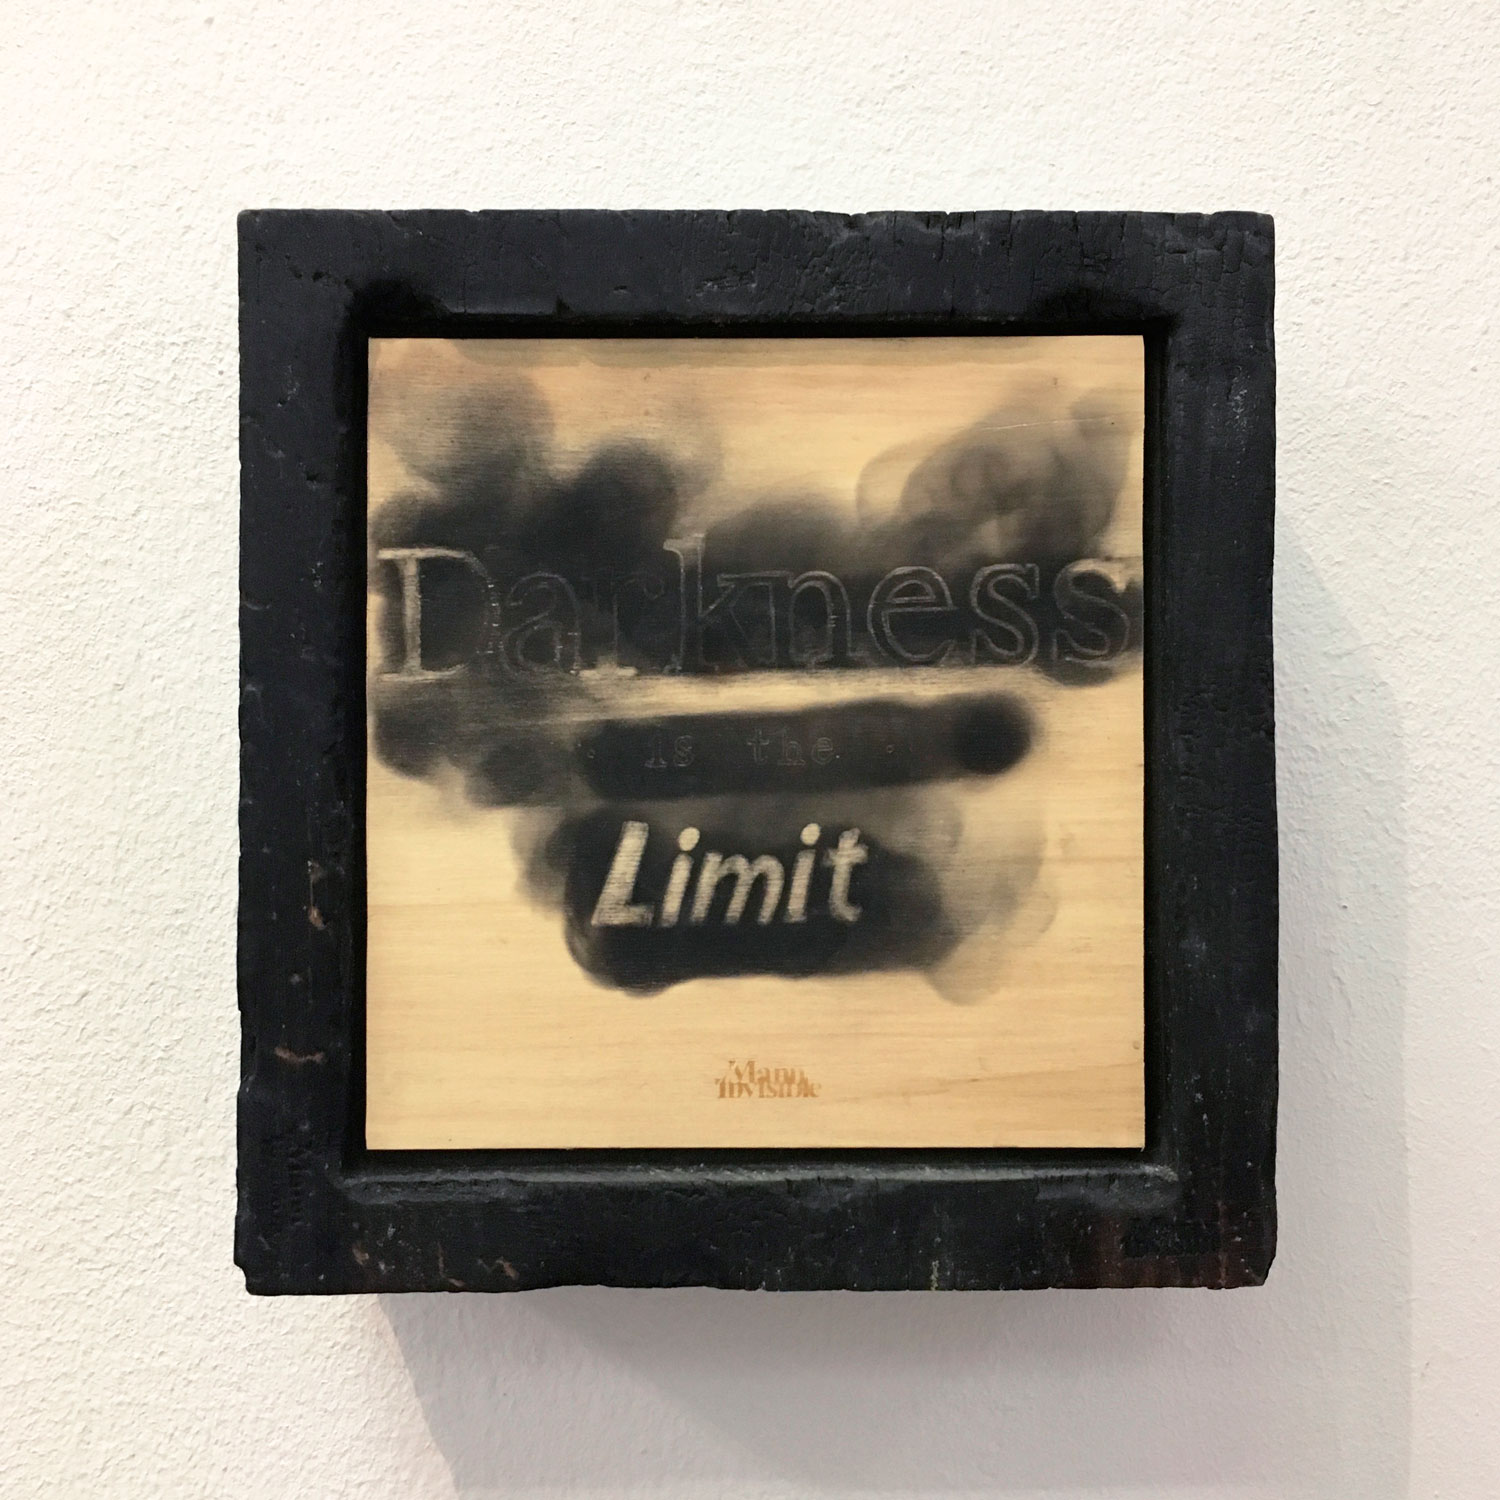 “Darkness is the Limit” Fumo su pino 30 x 28 x 10 cm 2017